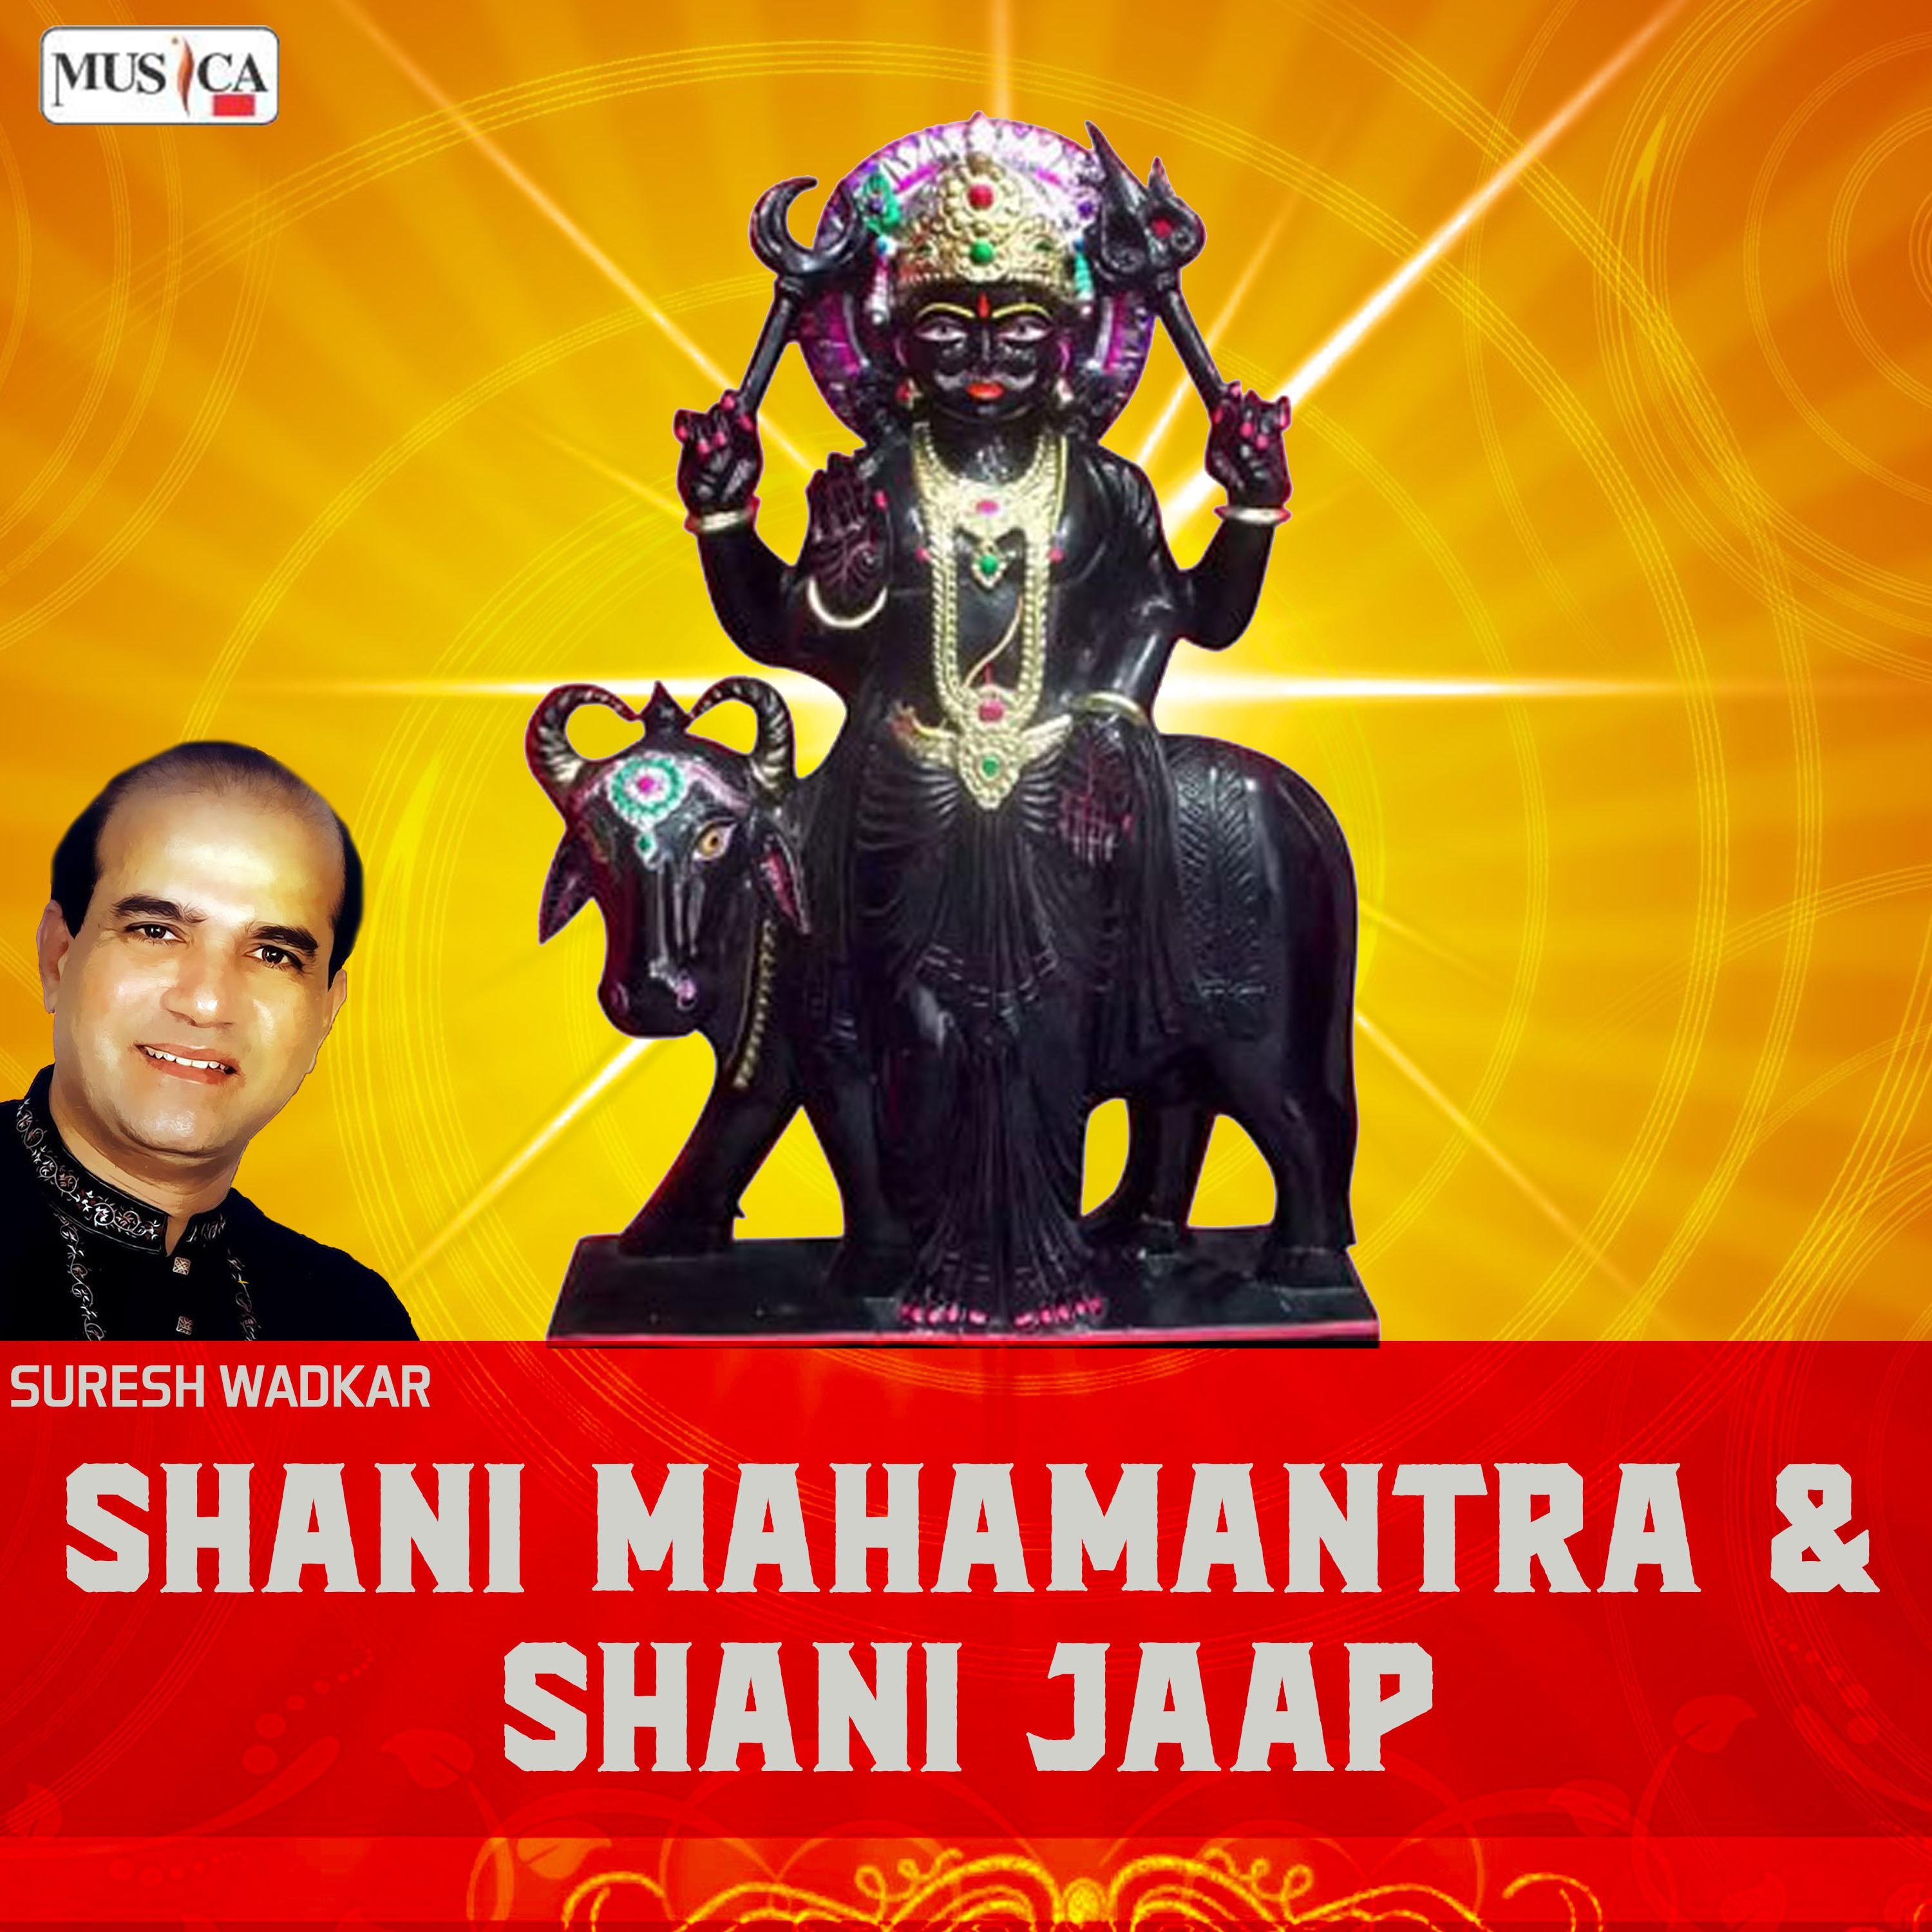 Shani Mahamantra and Shani Jaap